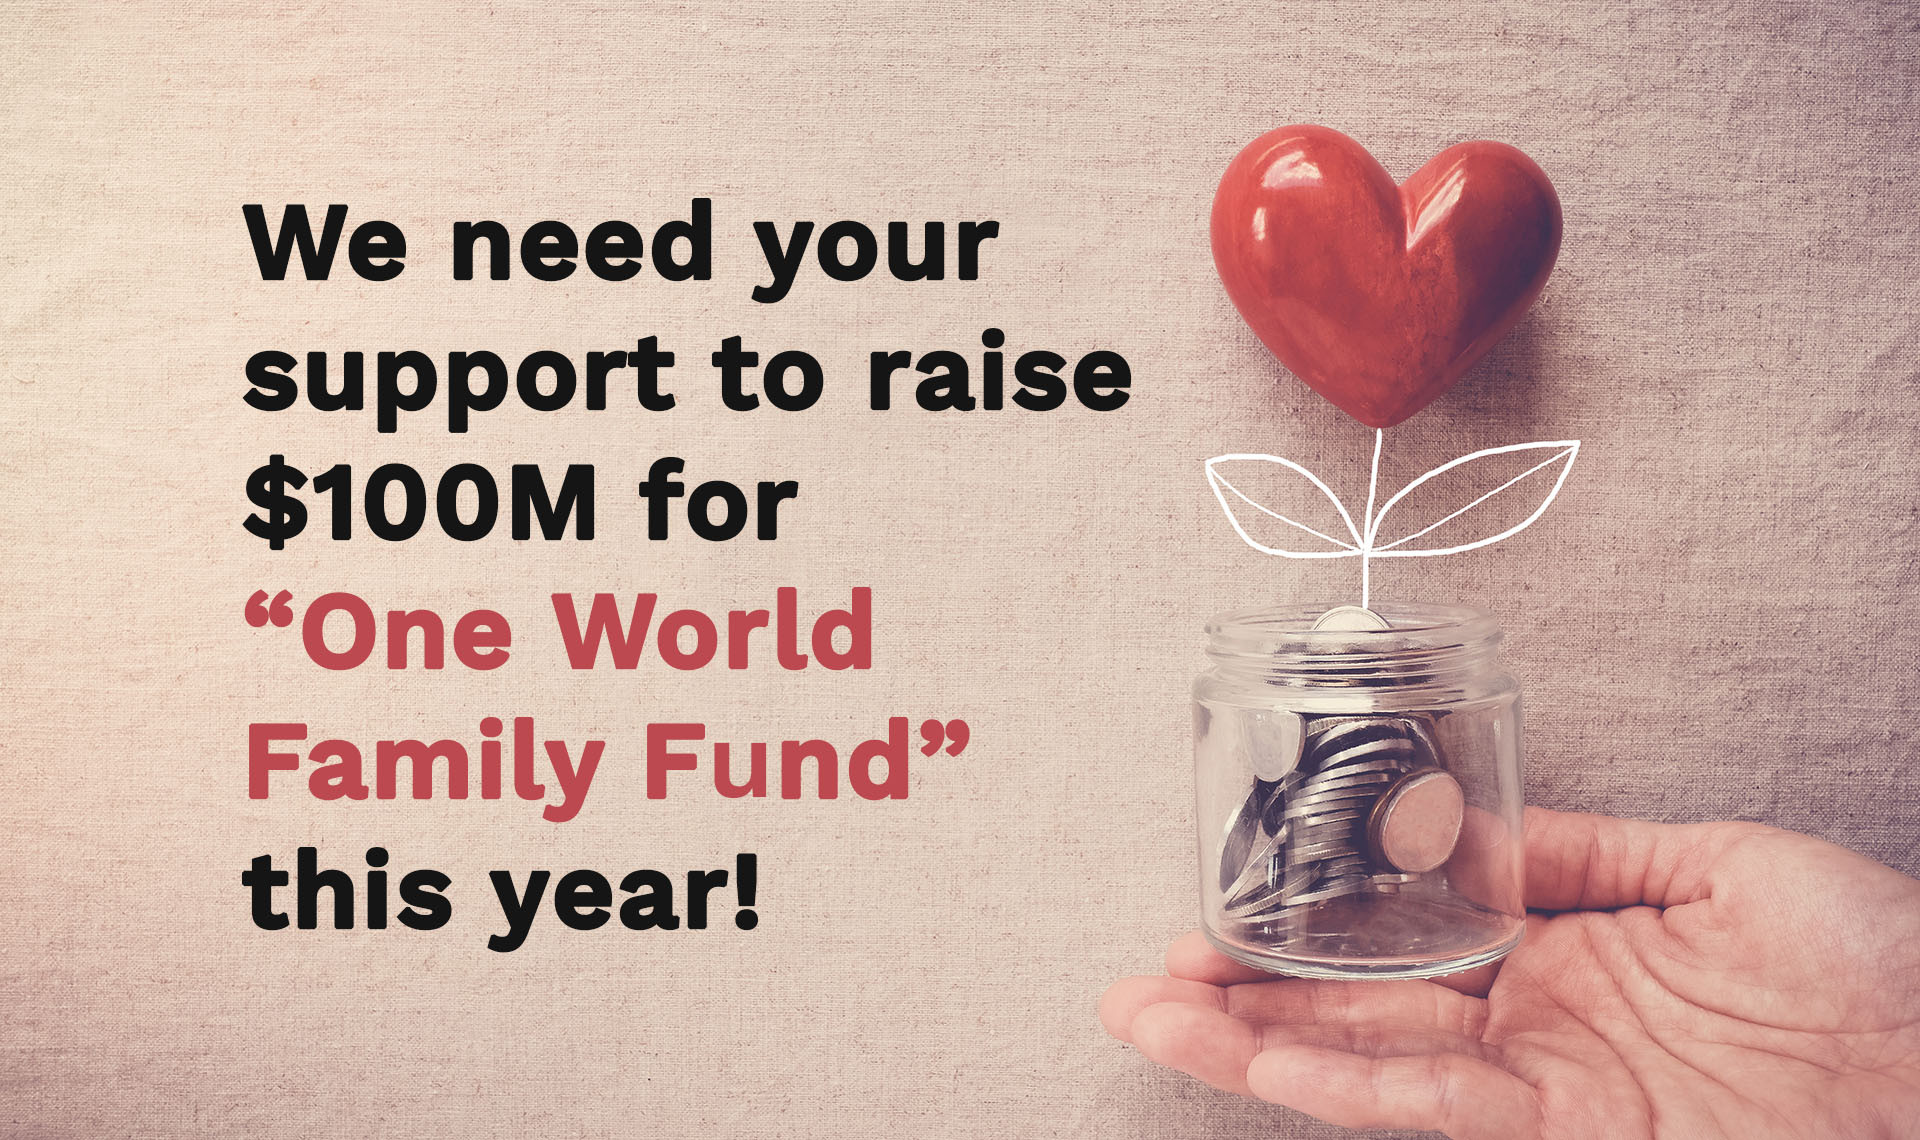 One World Family Fund